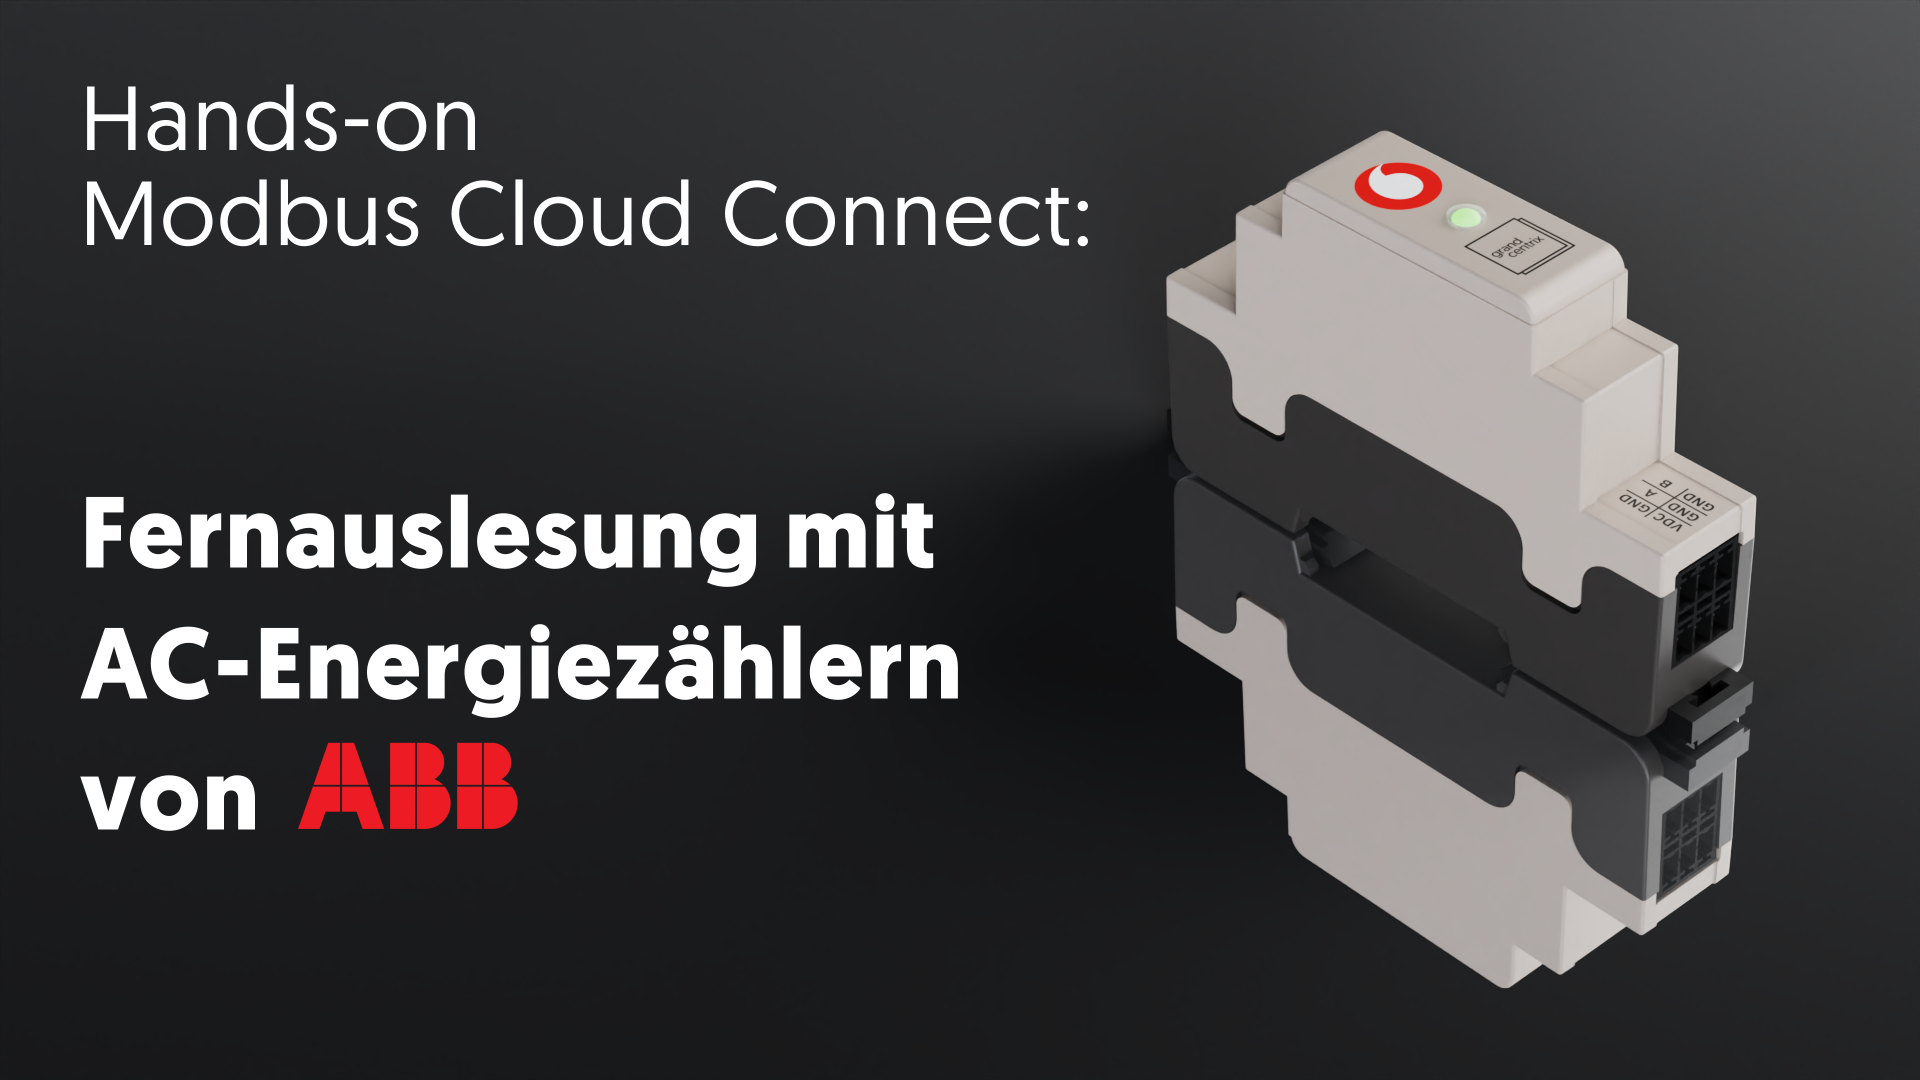 Hands-on Modbus Cloud Connect – Fernauslesung mit AC-Energiezählern